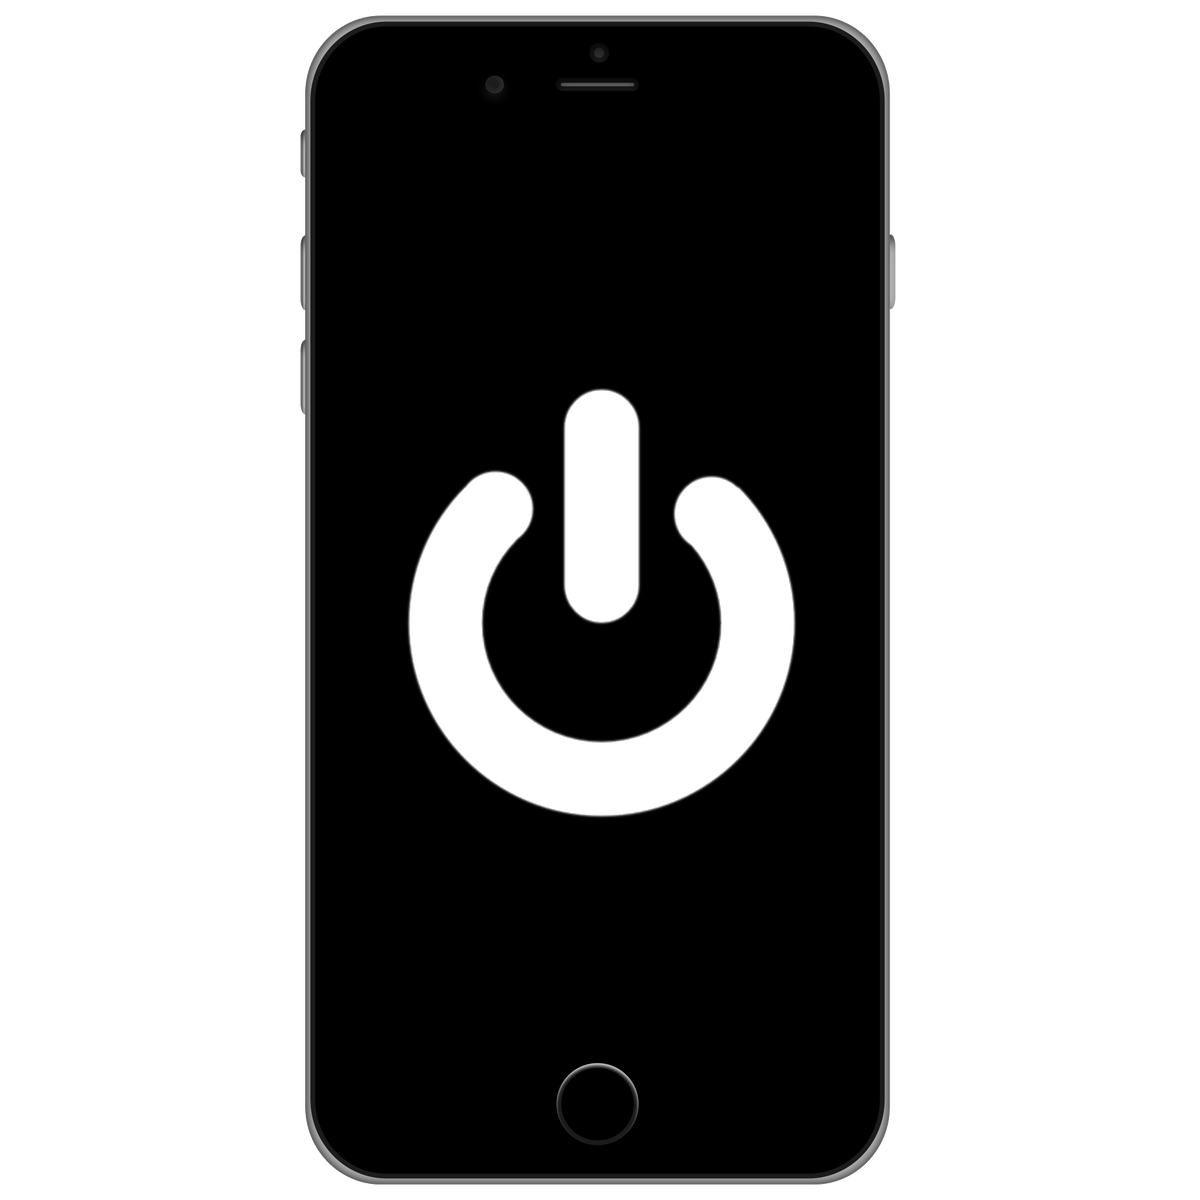 iPhone 11 Pro Max Power Button Repair - TechPros